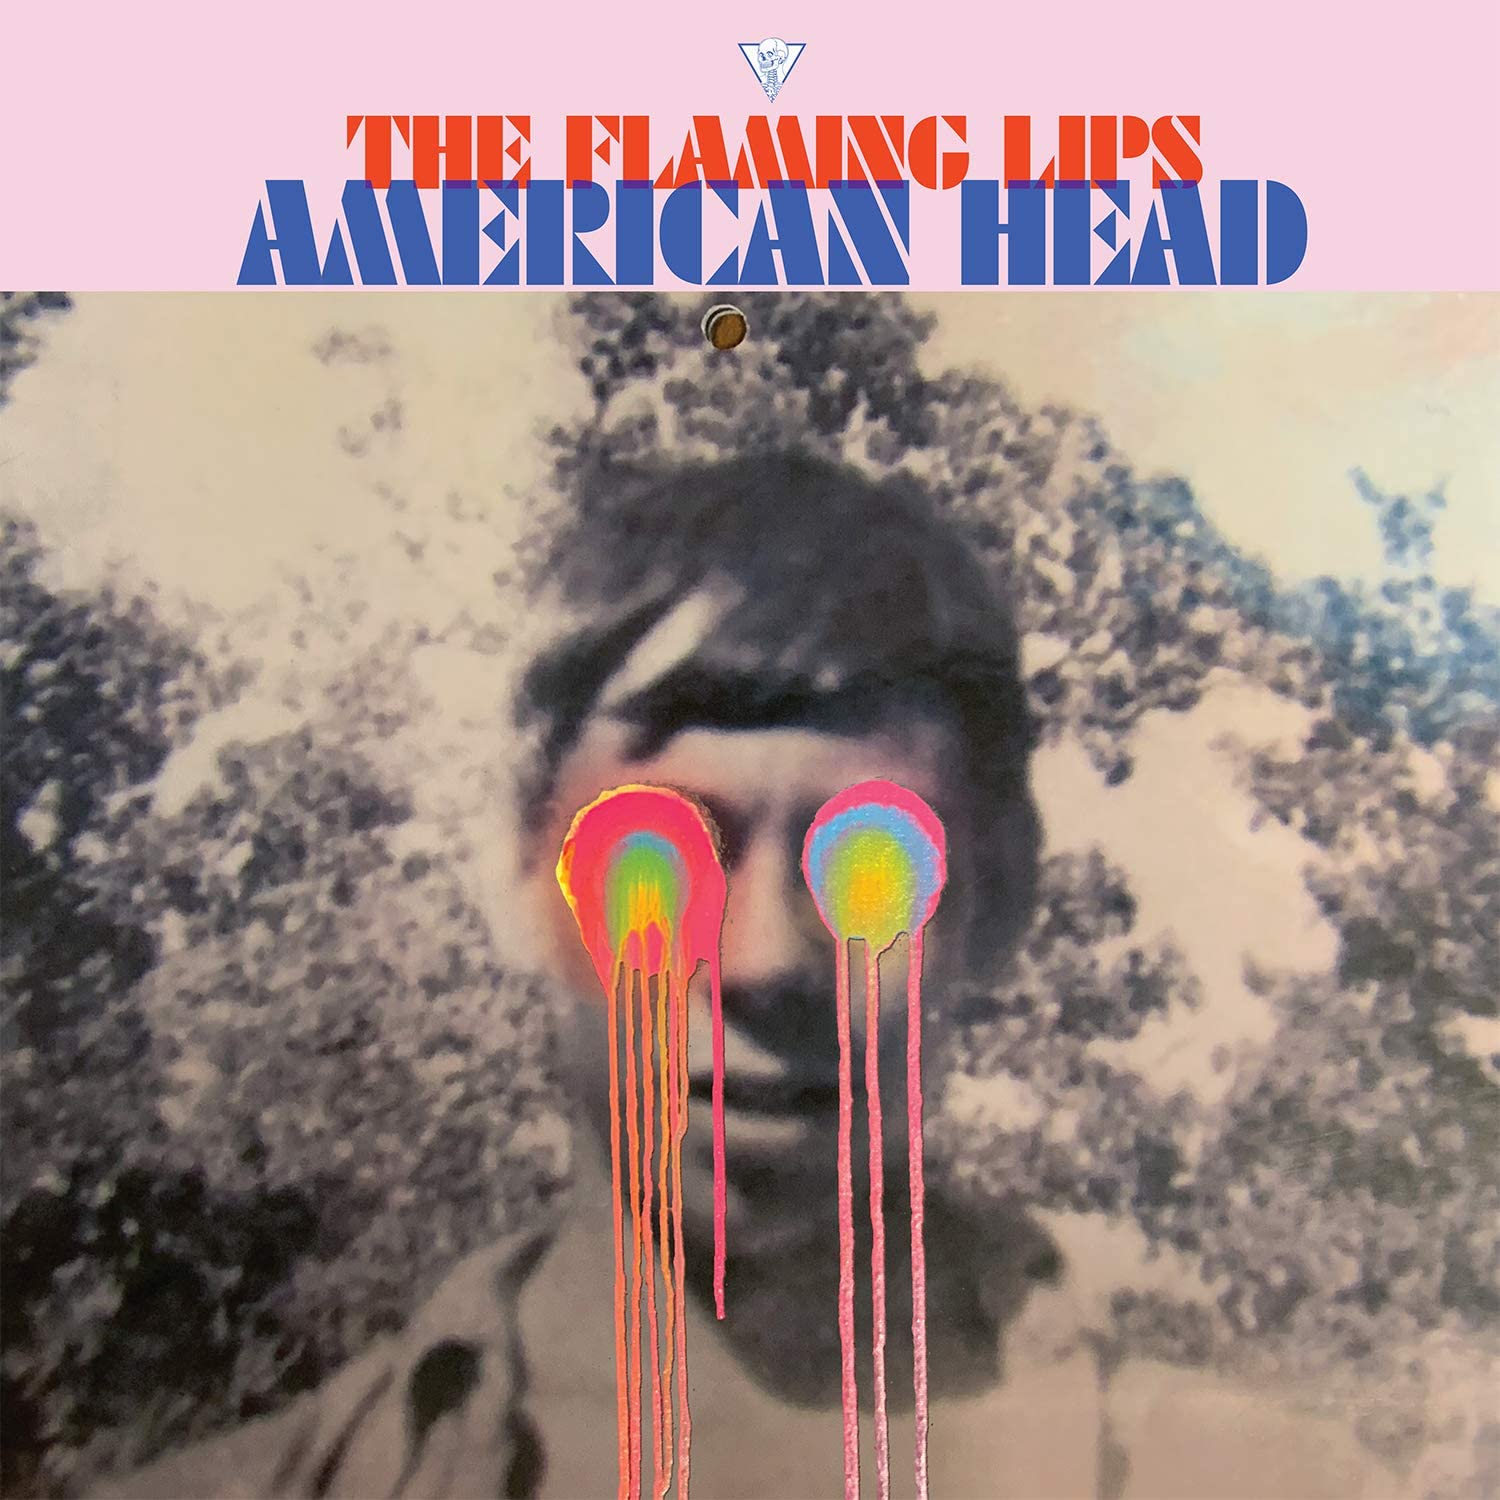 Copertina Vinile 33 giri American Head di The Flaming Lips